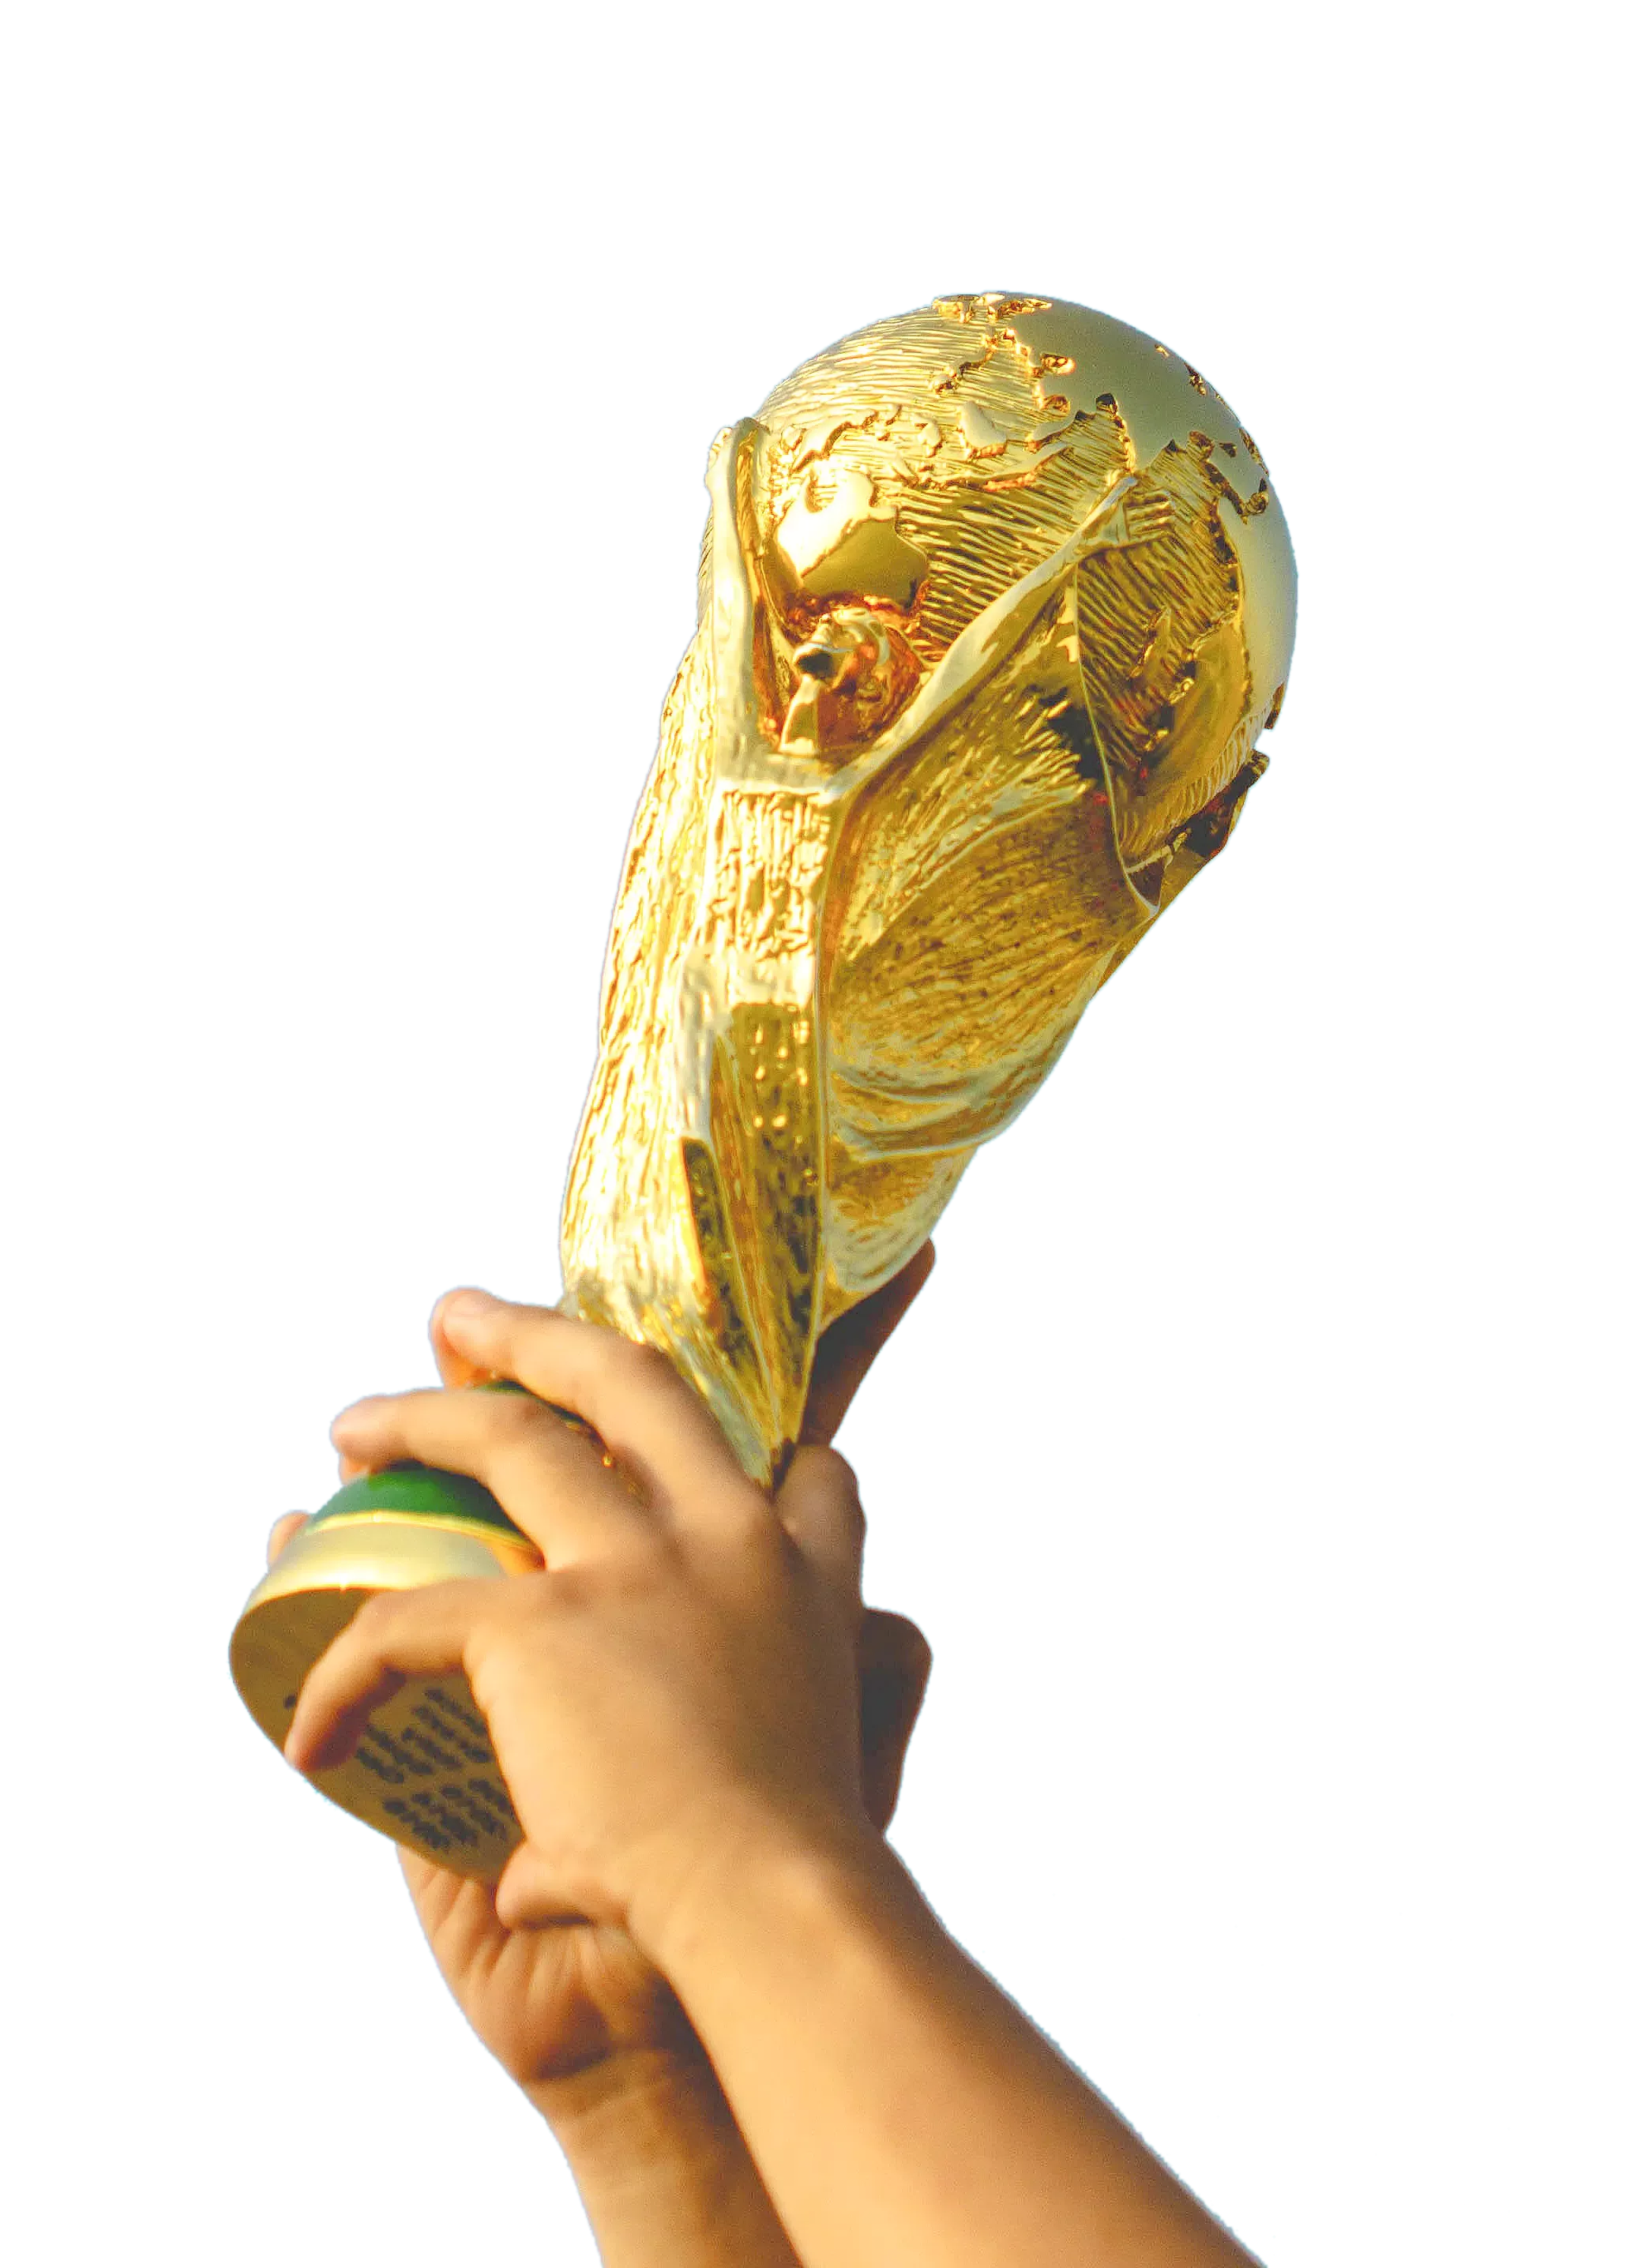 TGM Research world cup survey trophy 2022